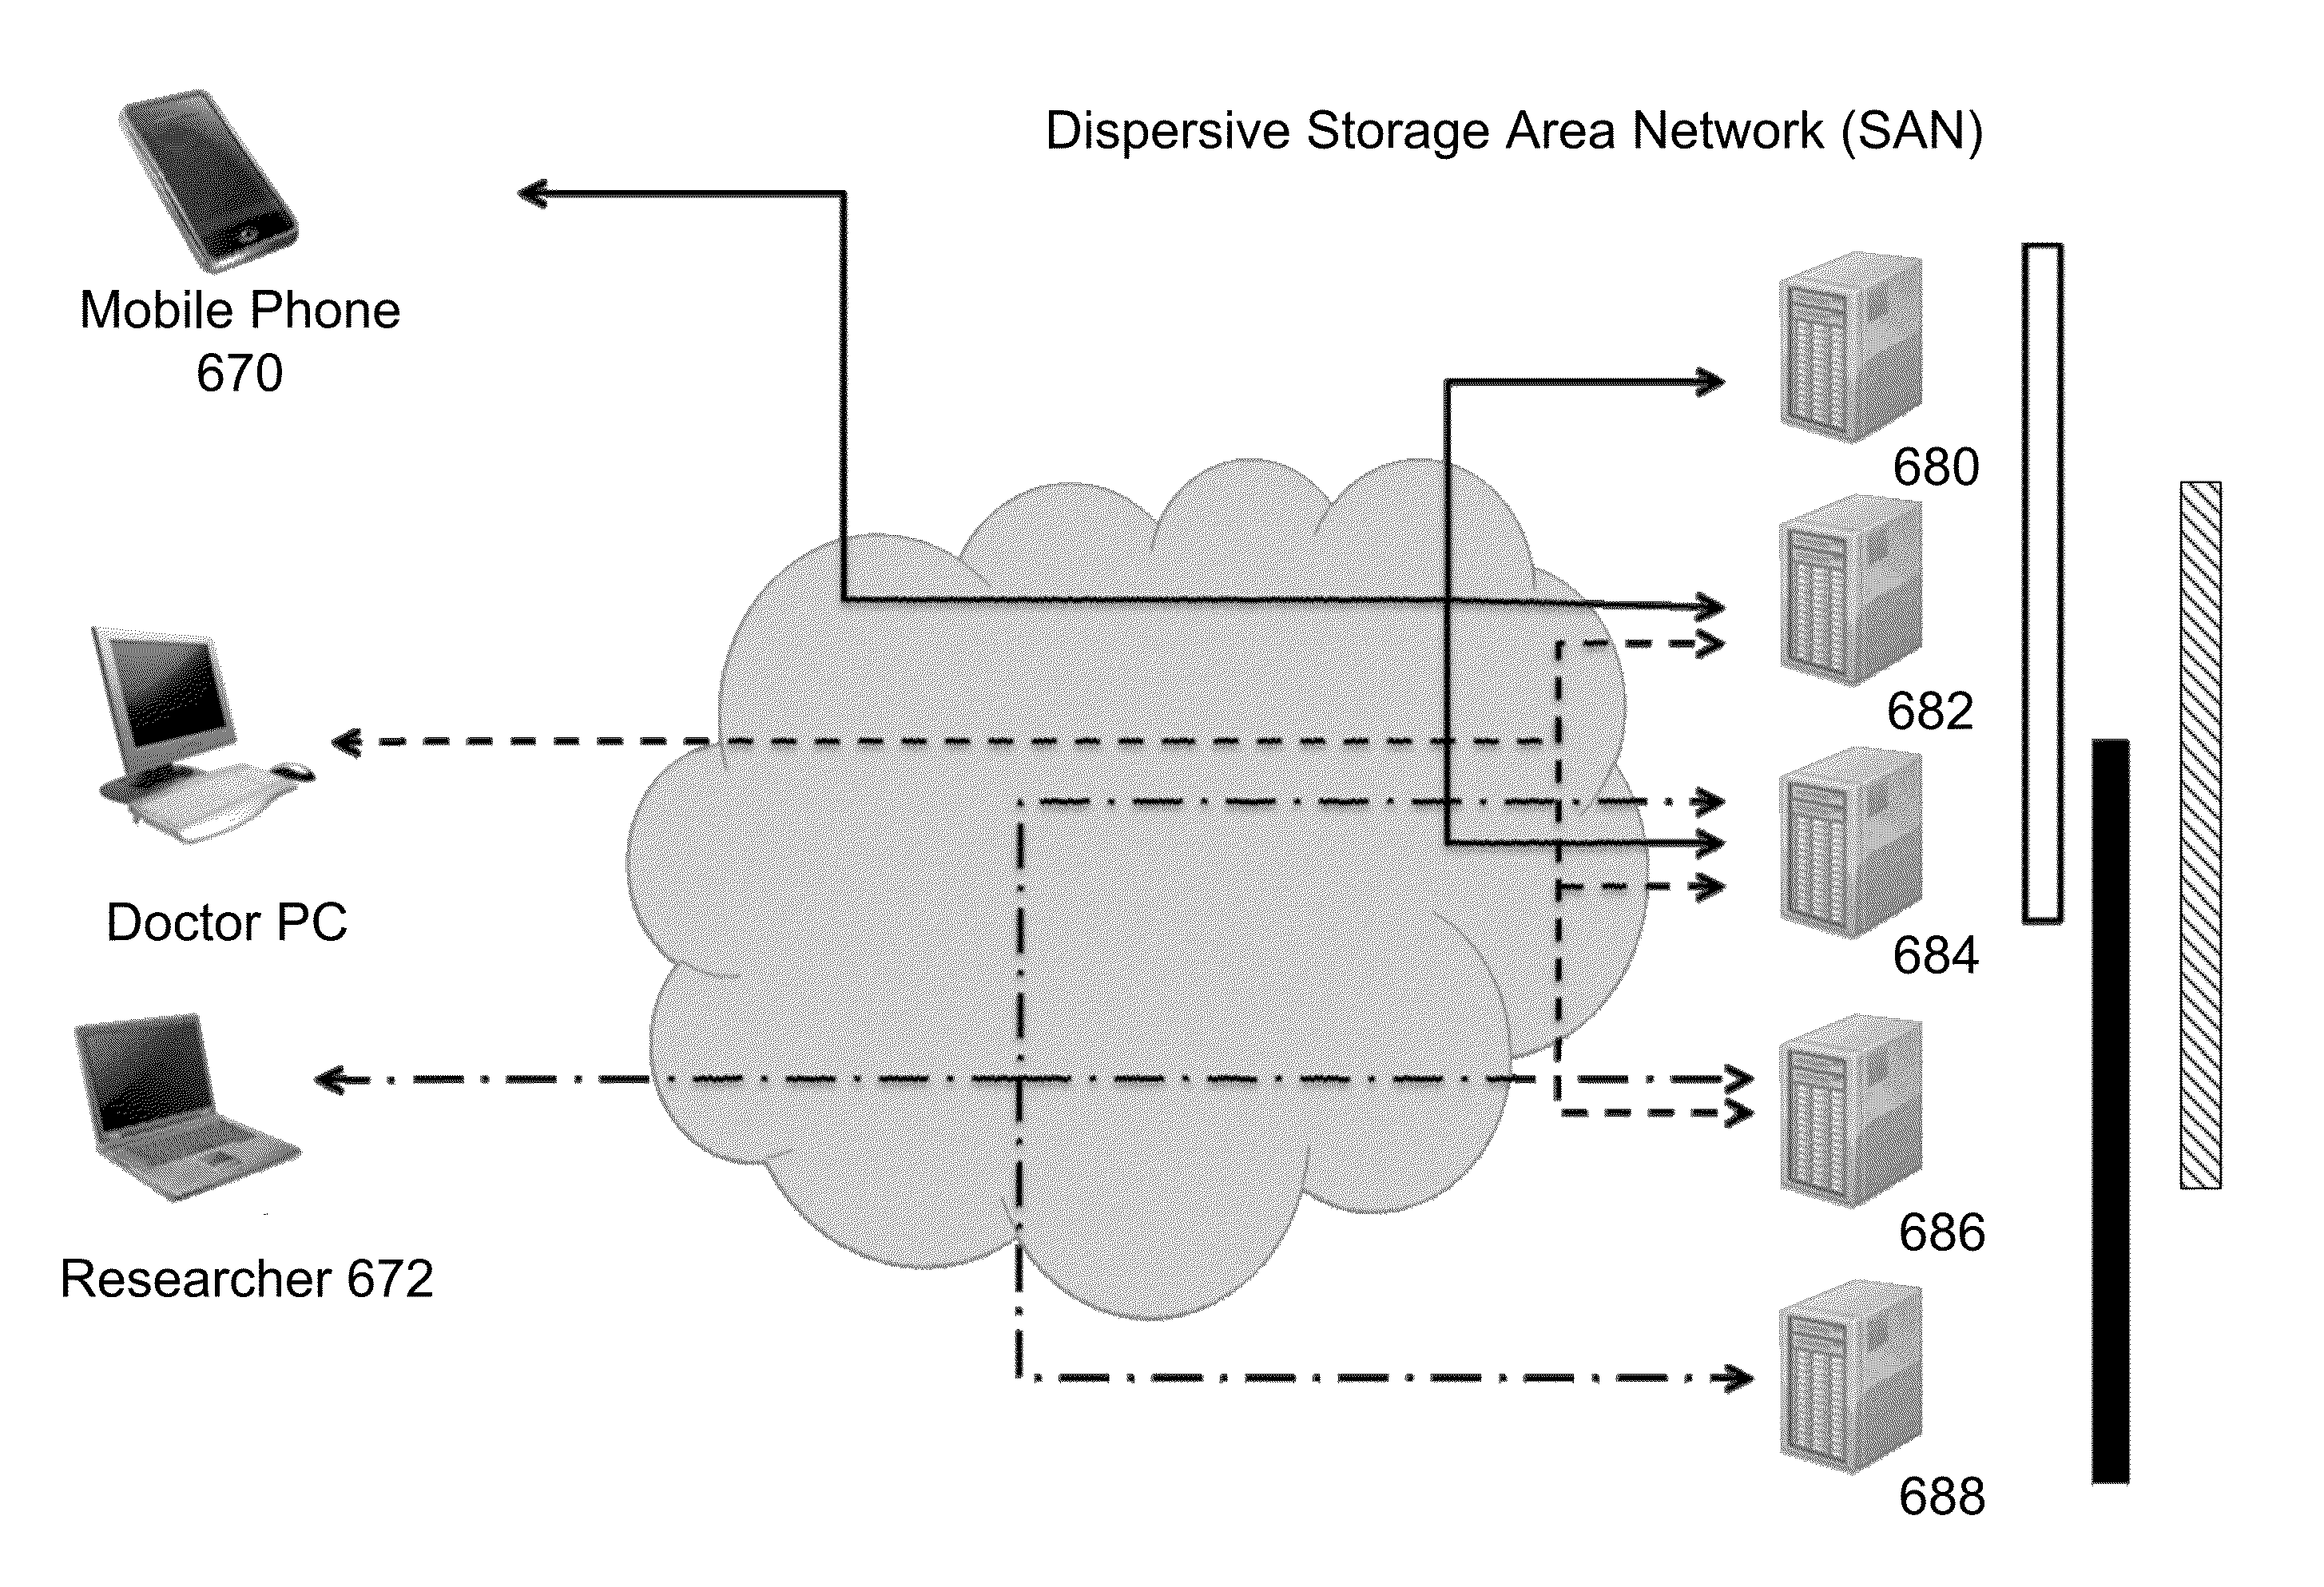 Dispersive storage area networks